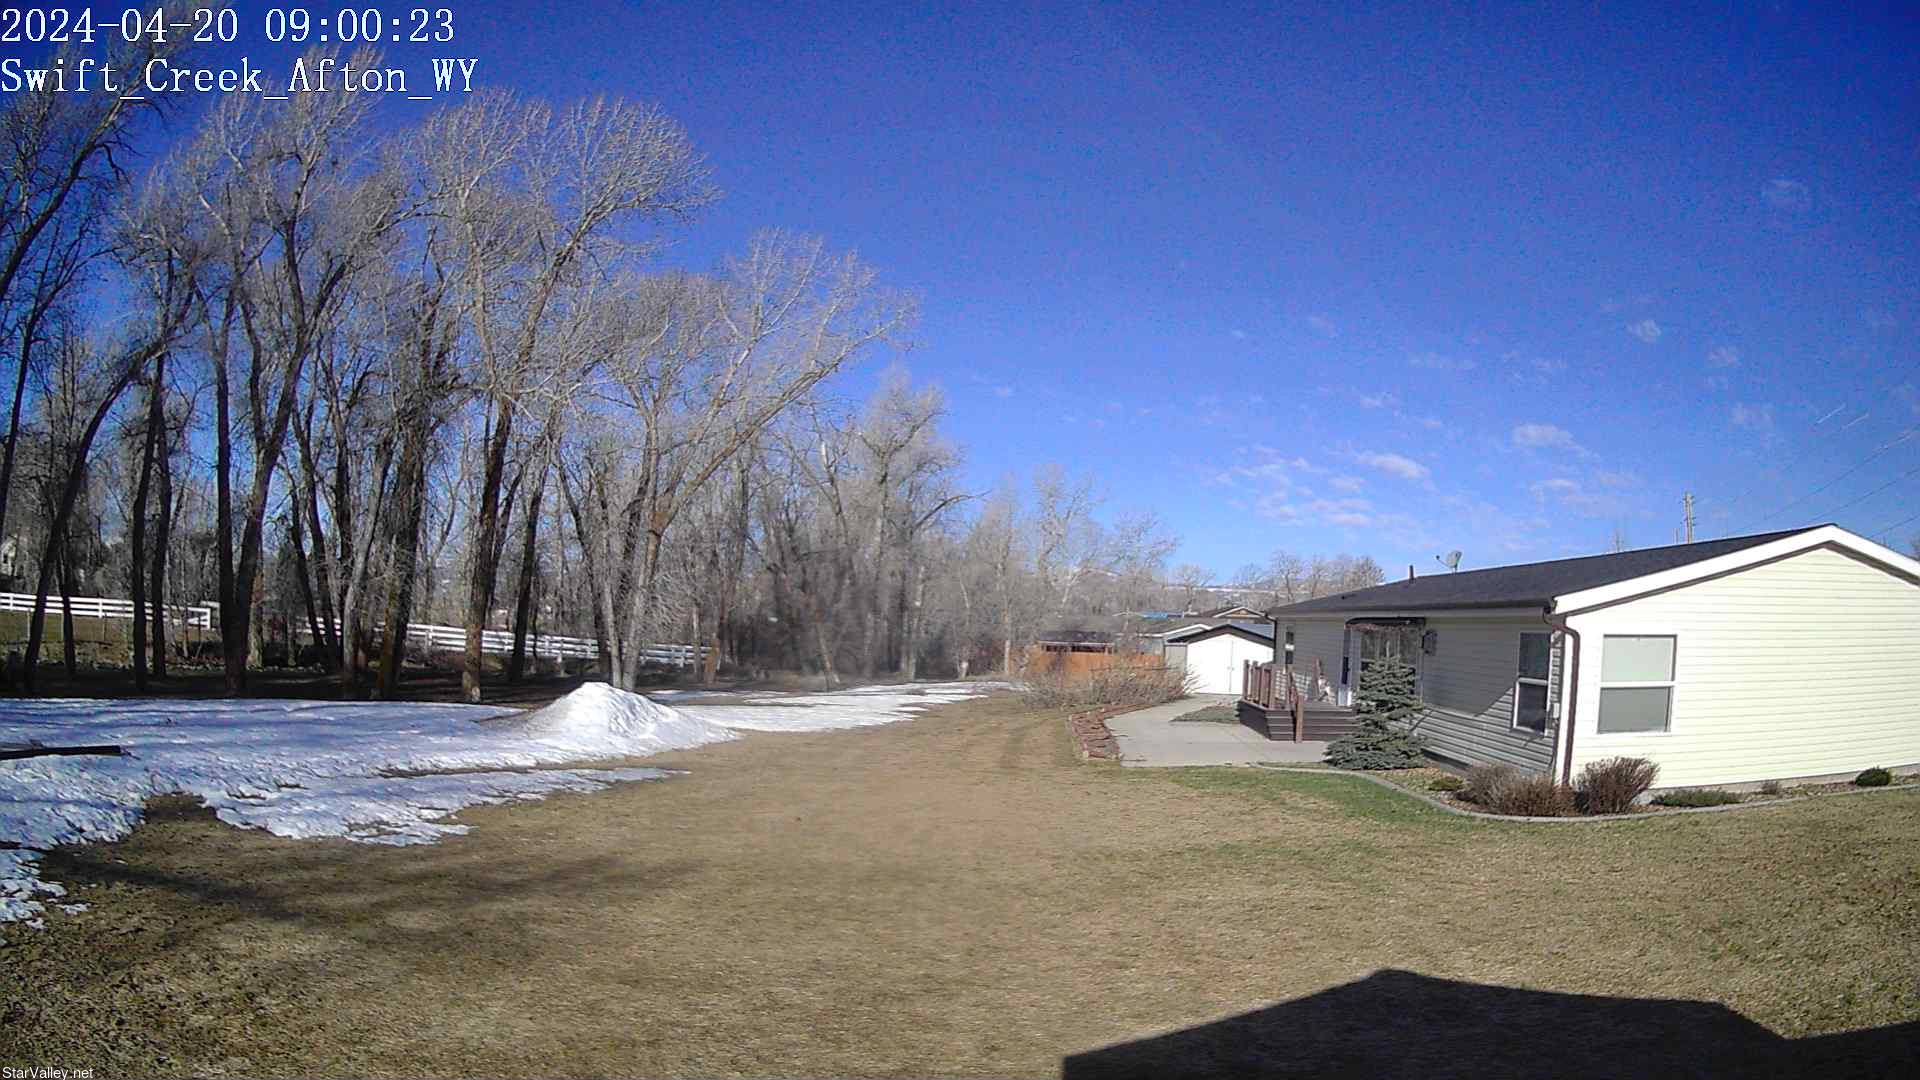 time-lapse frame, Swift Creek webcam